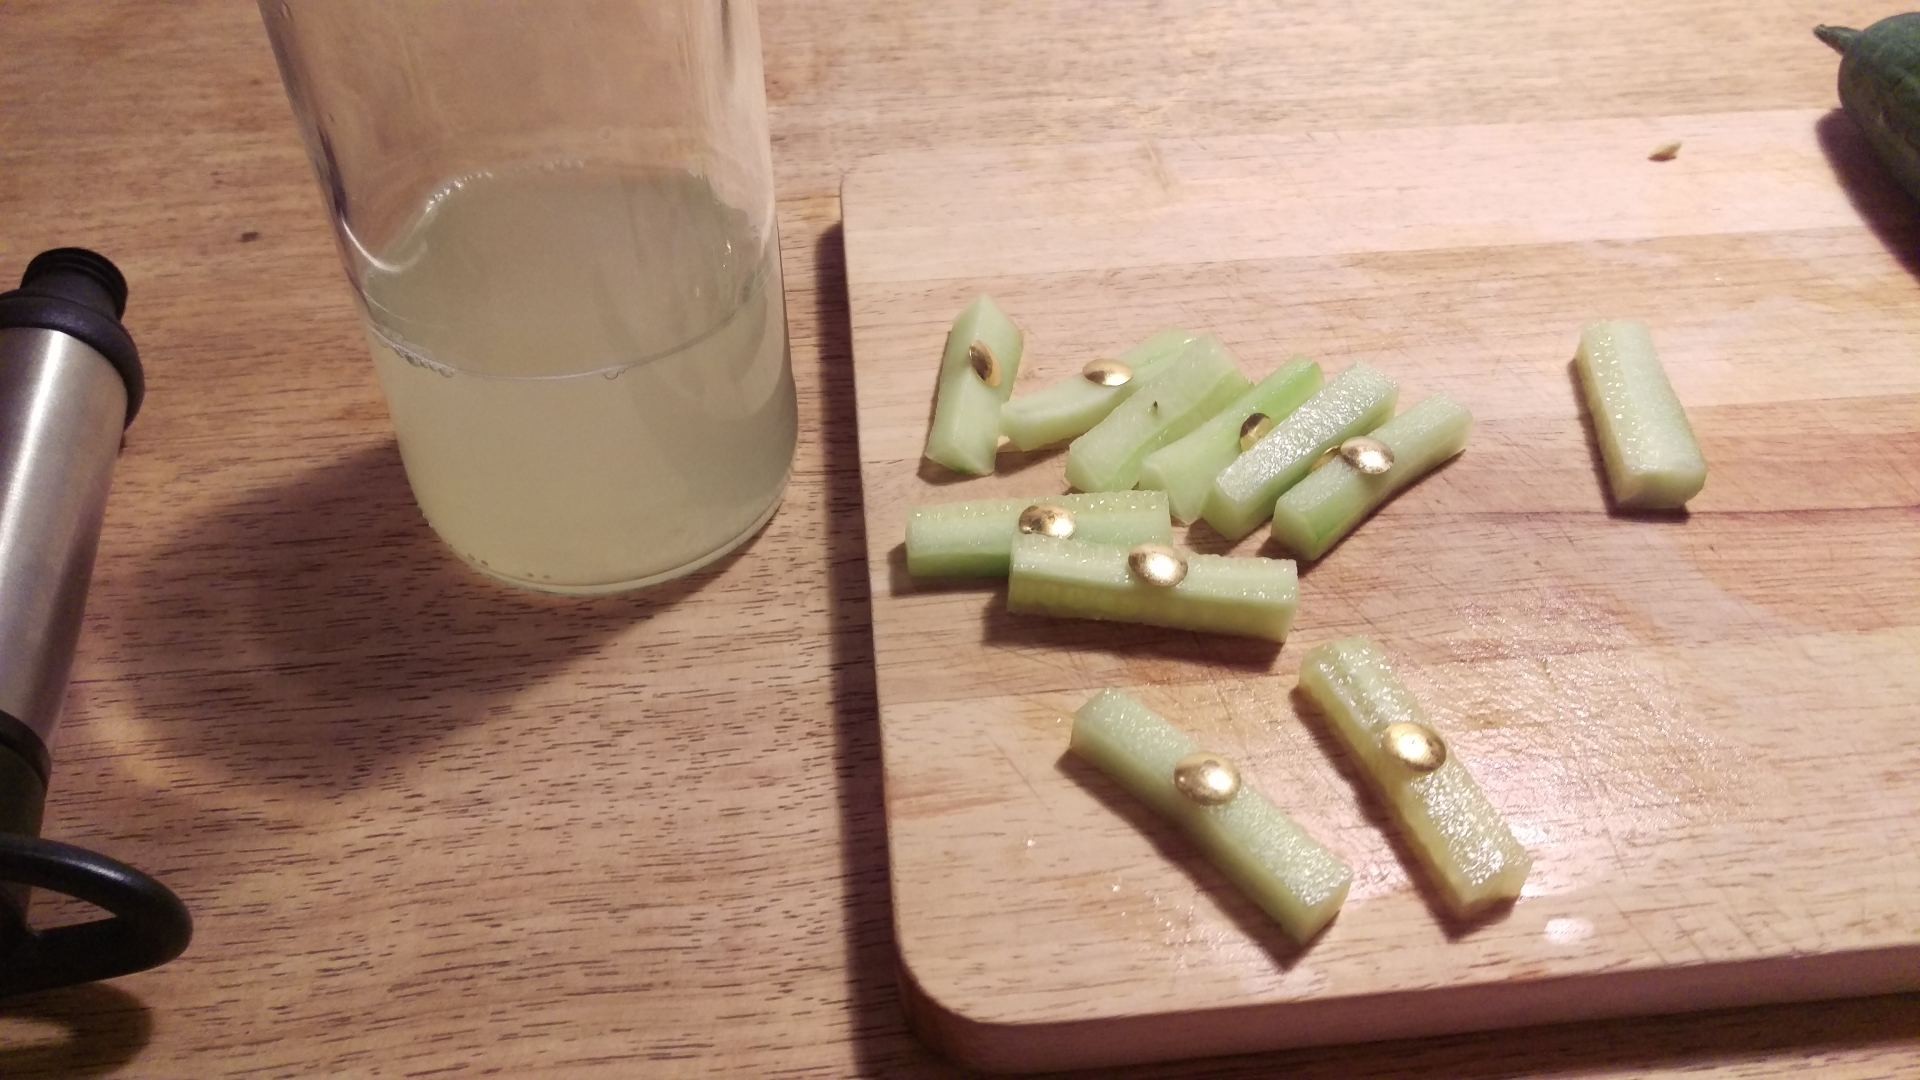 Cucumber prepared with pins